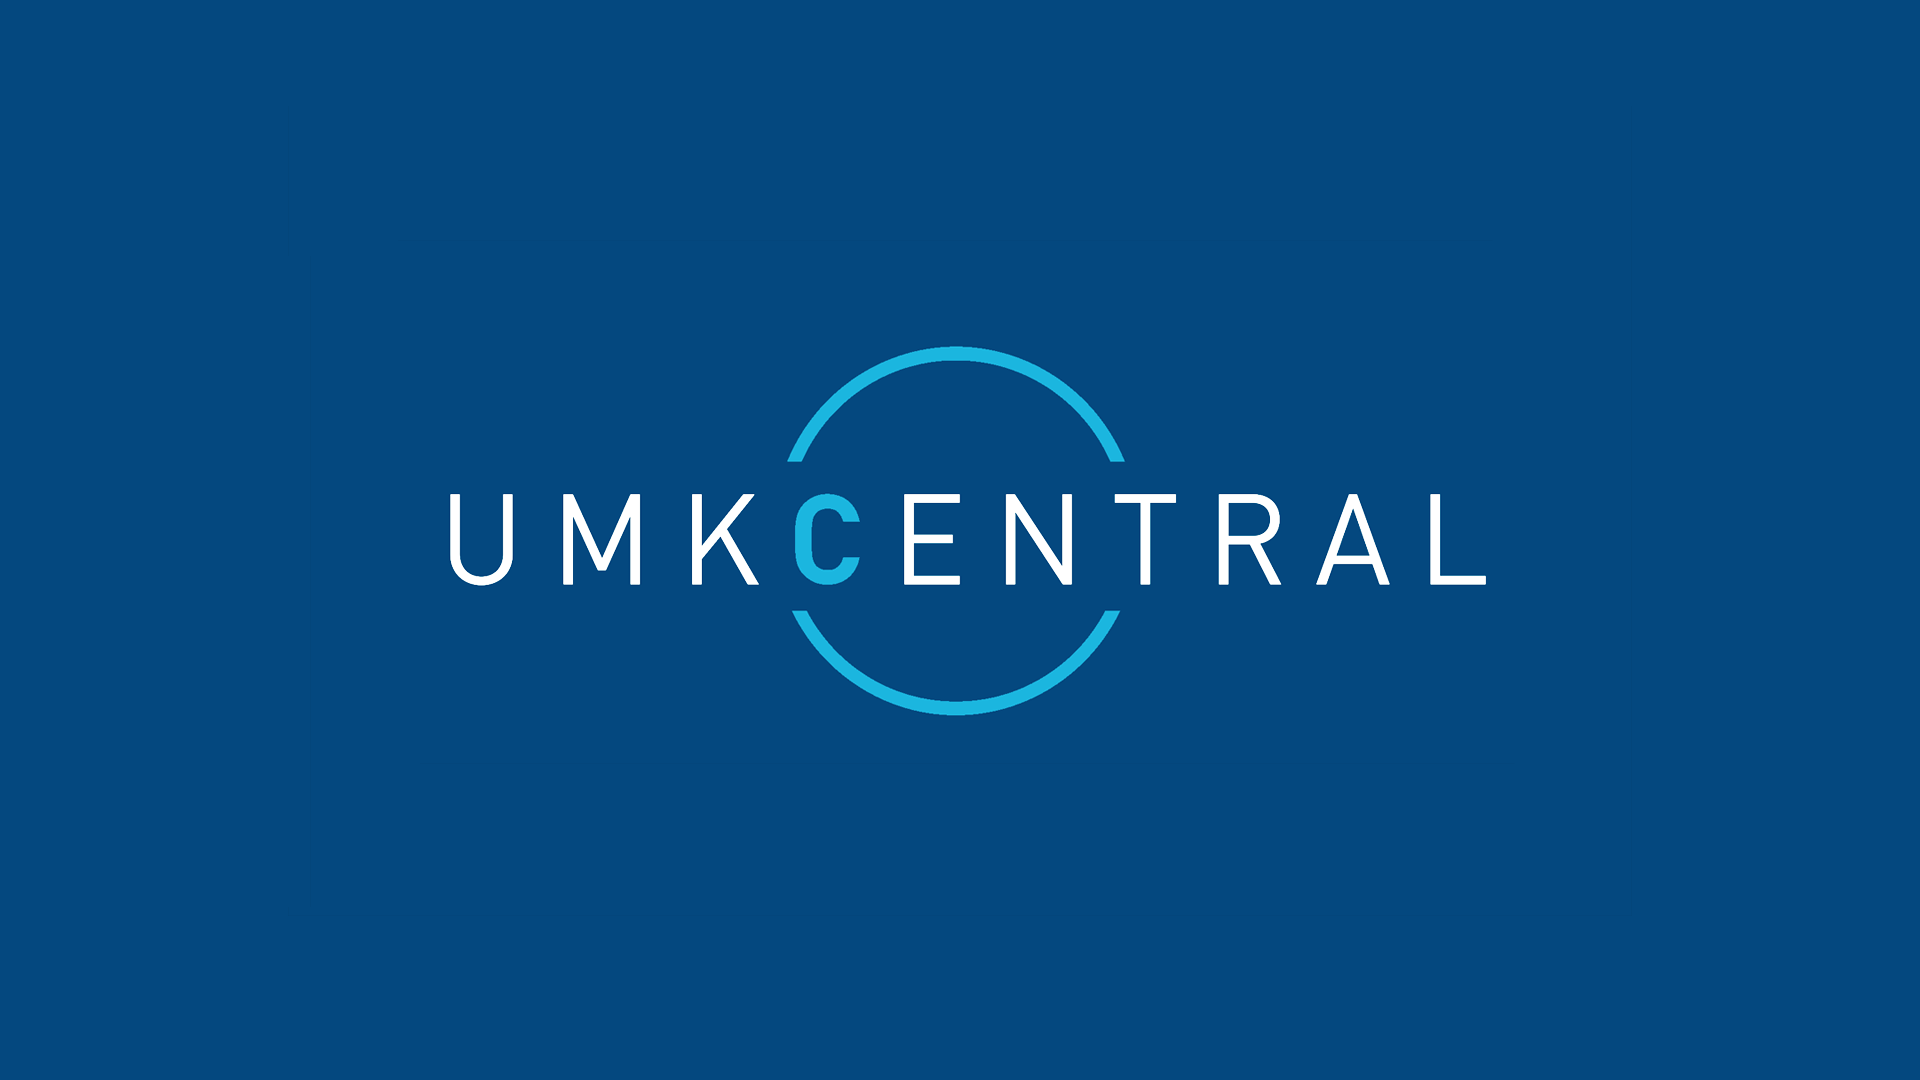 UMKC Central logo